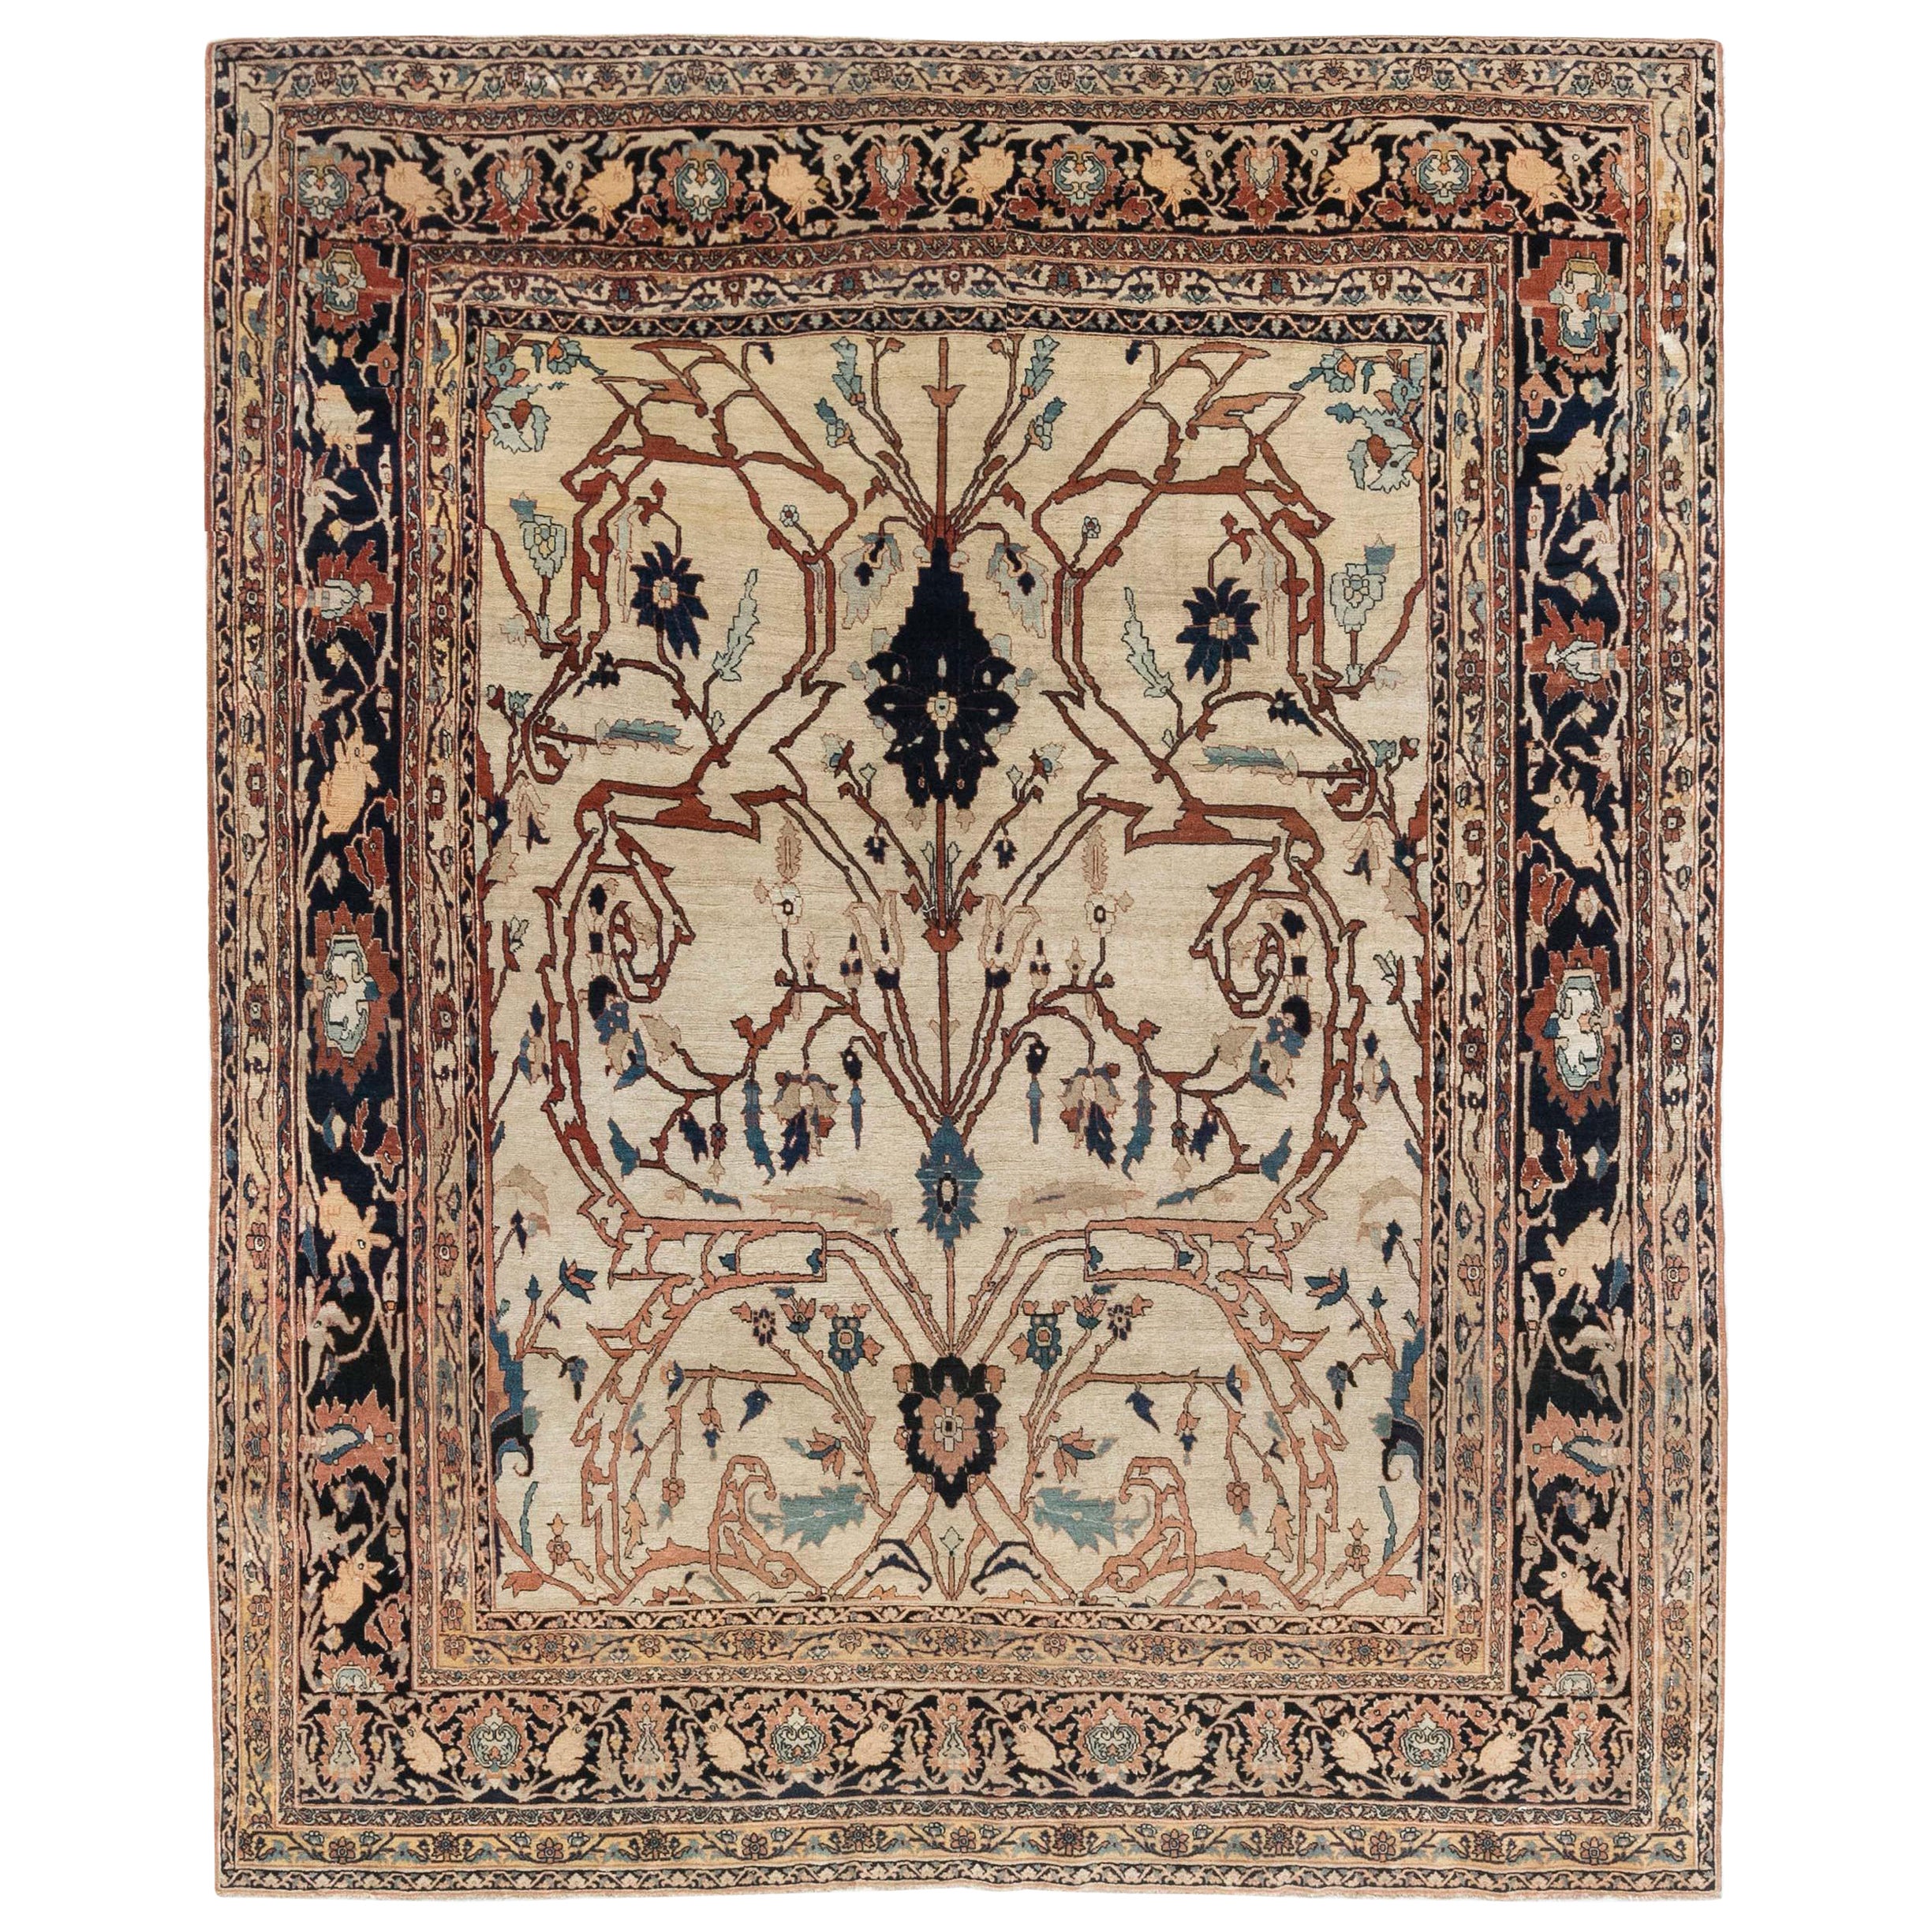 19th Century Persian Tabriz Handwoven Wool Rug